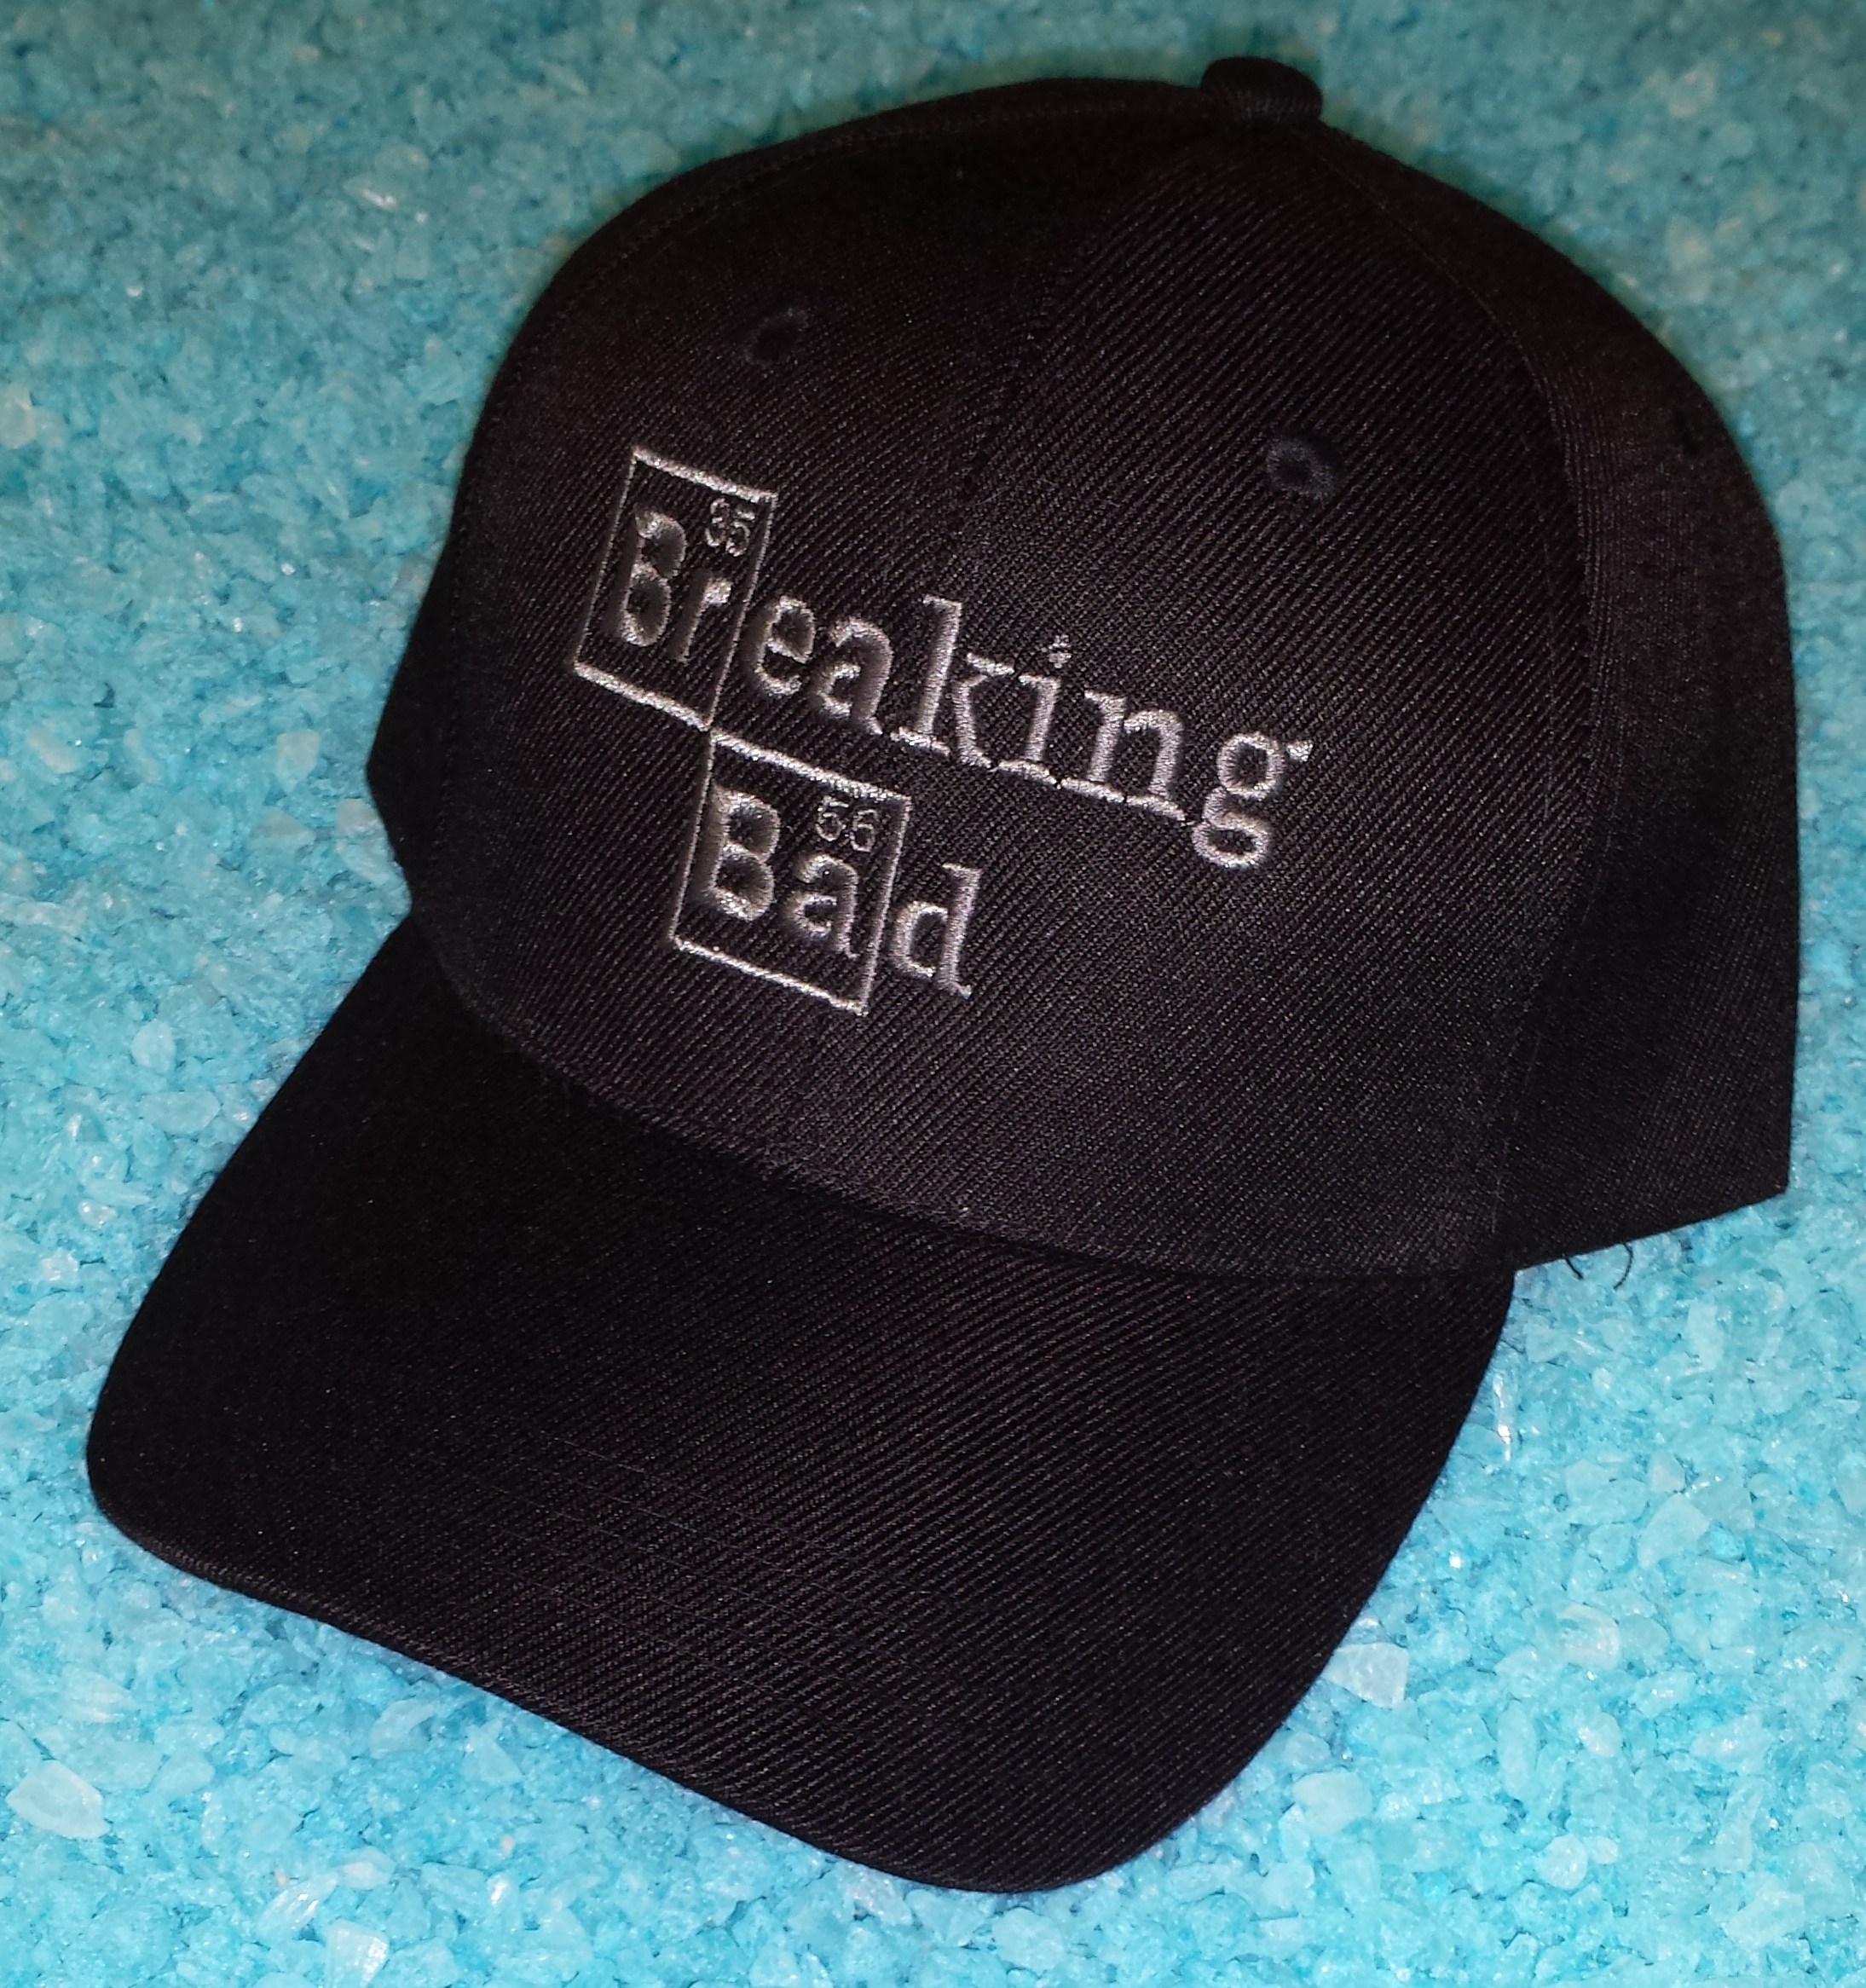 Gray Embroidered Breaking Bad on Black baseball cap